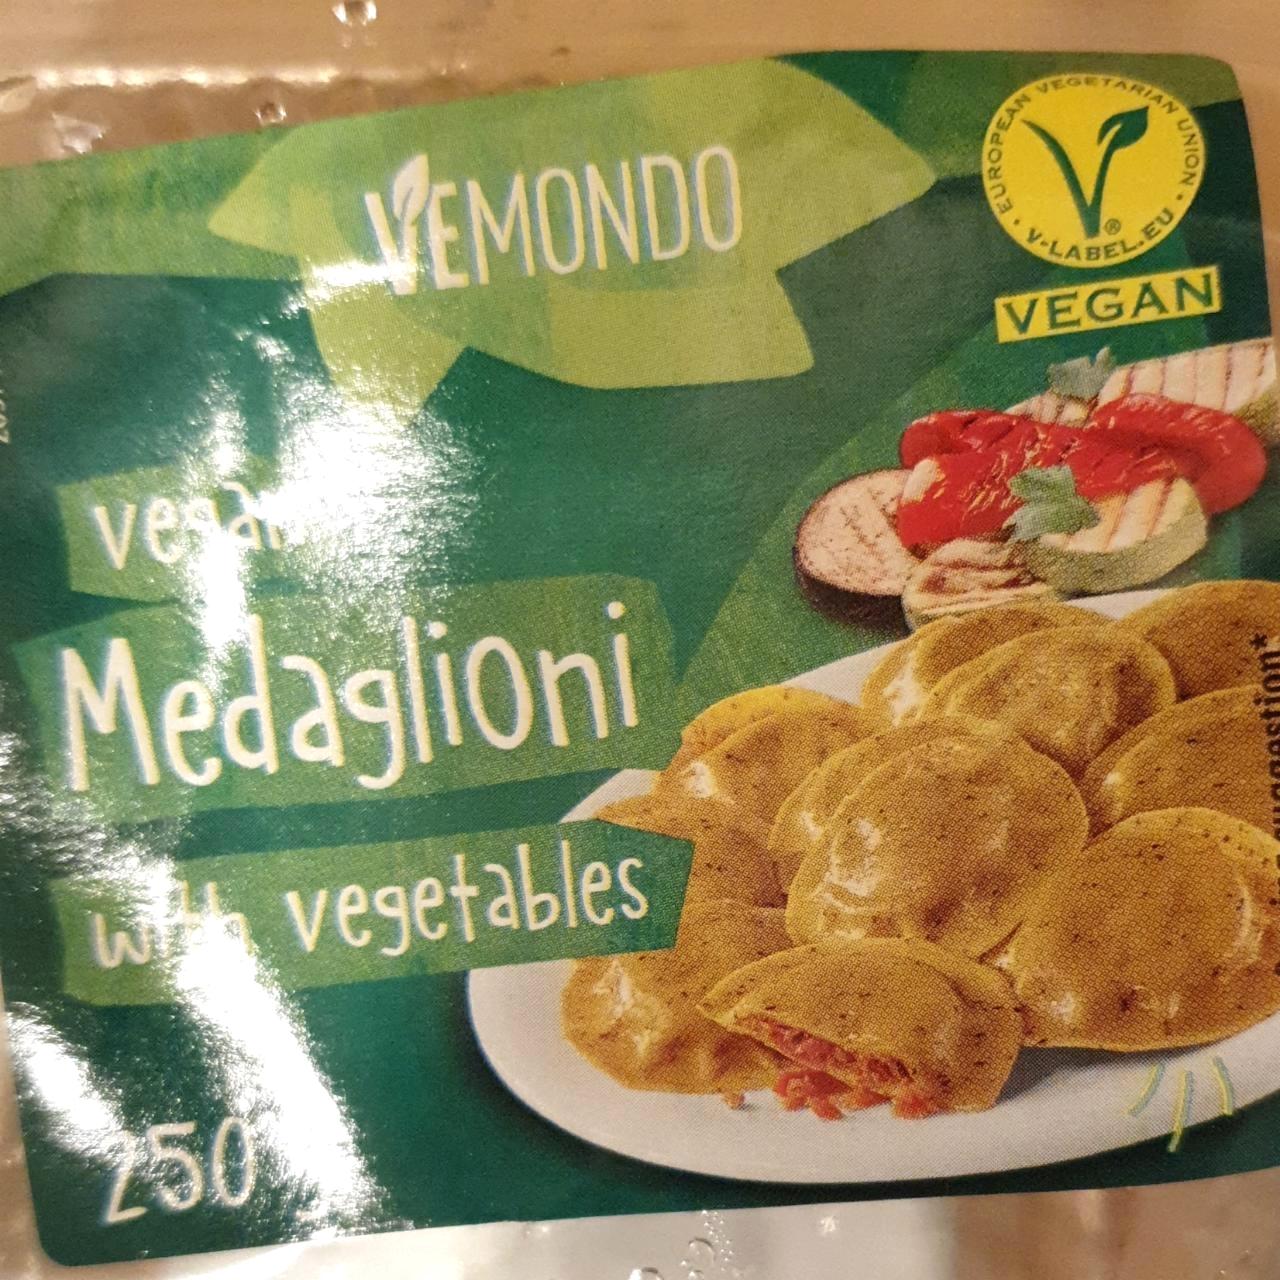 Képek - Vegan medaglioni with vegetables Vemondo